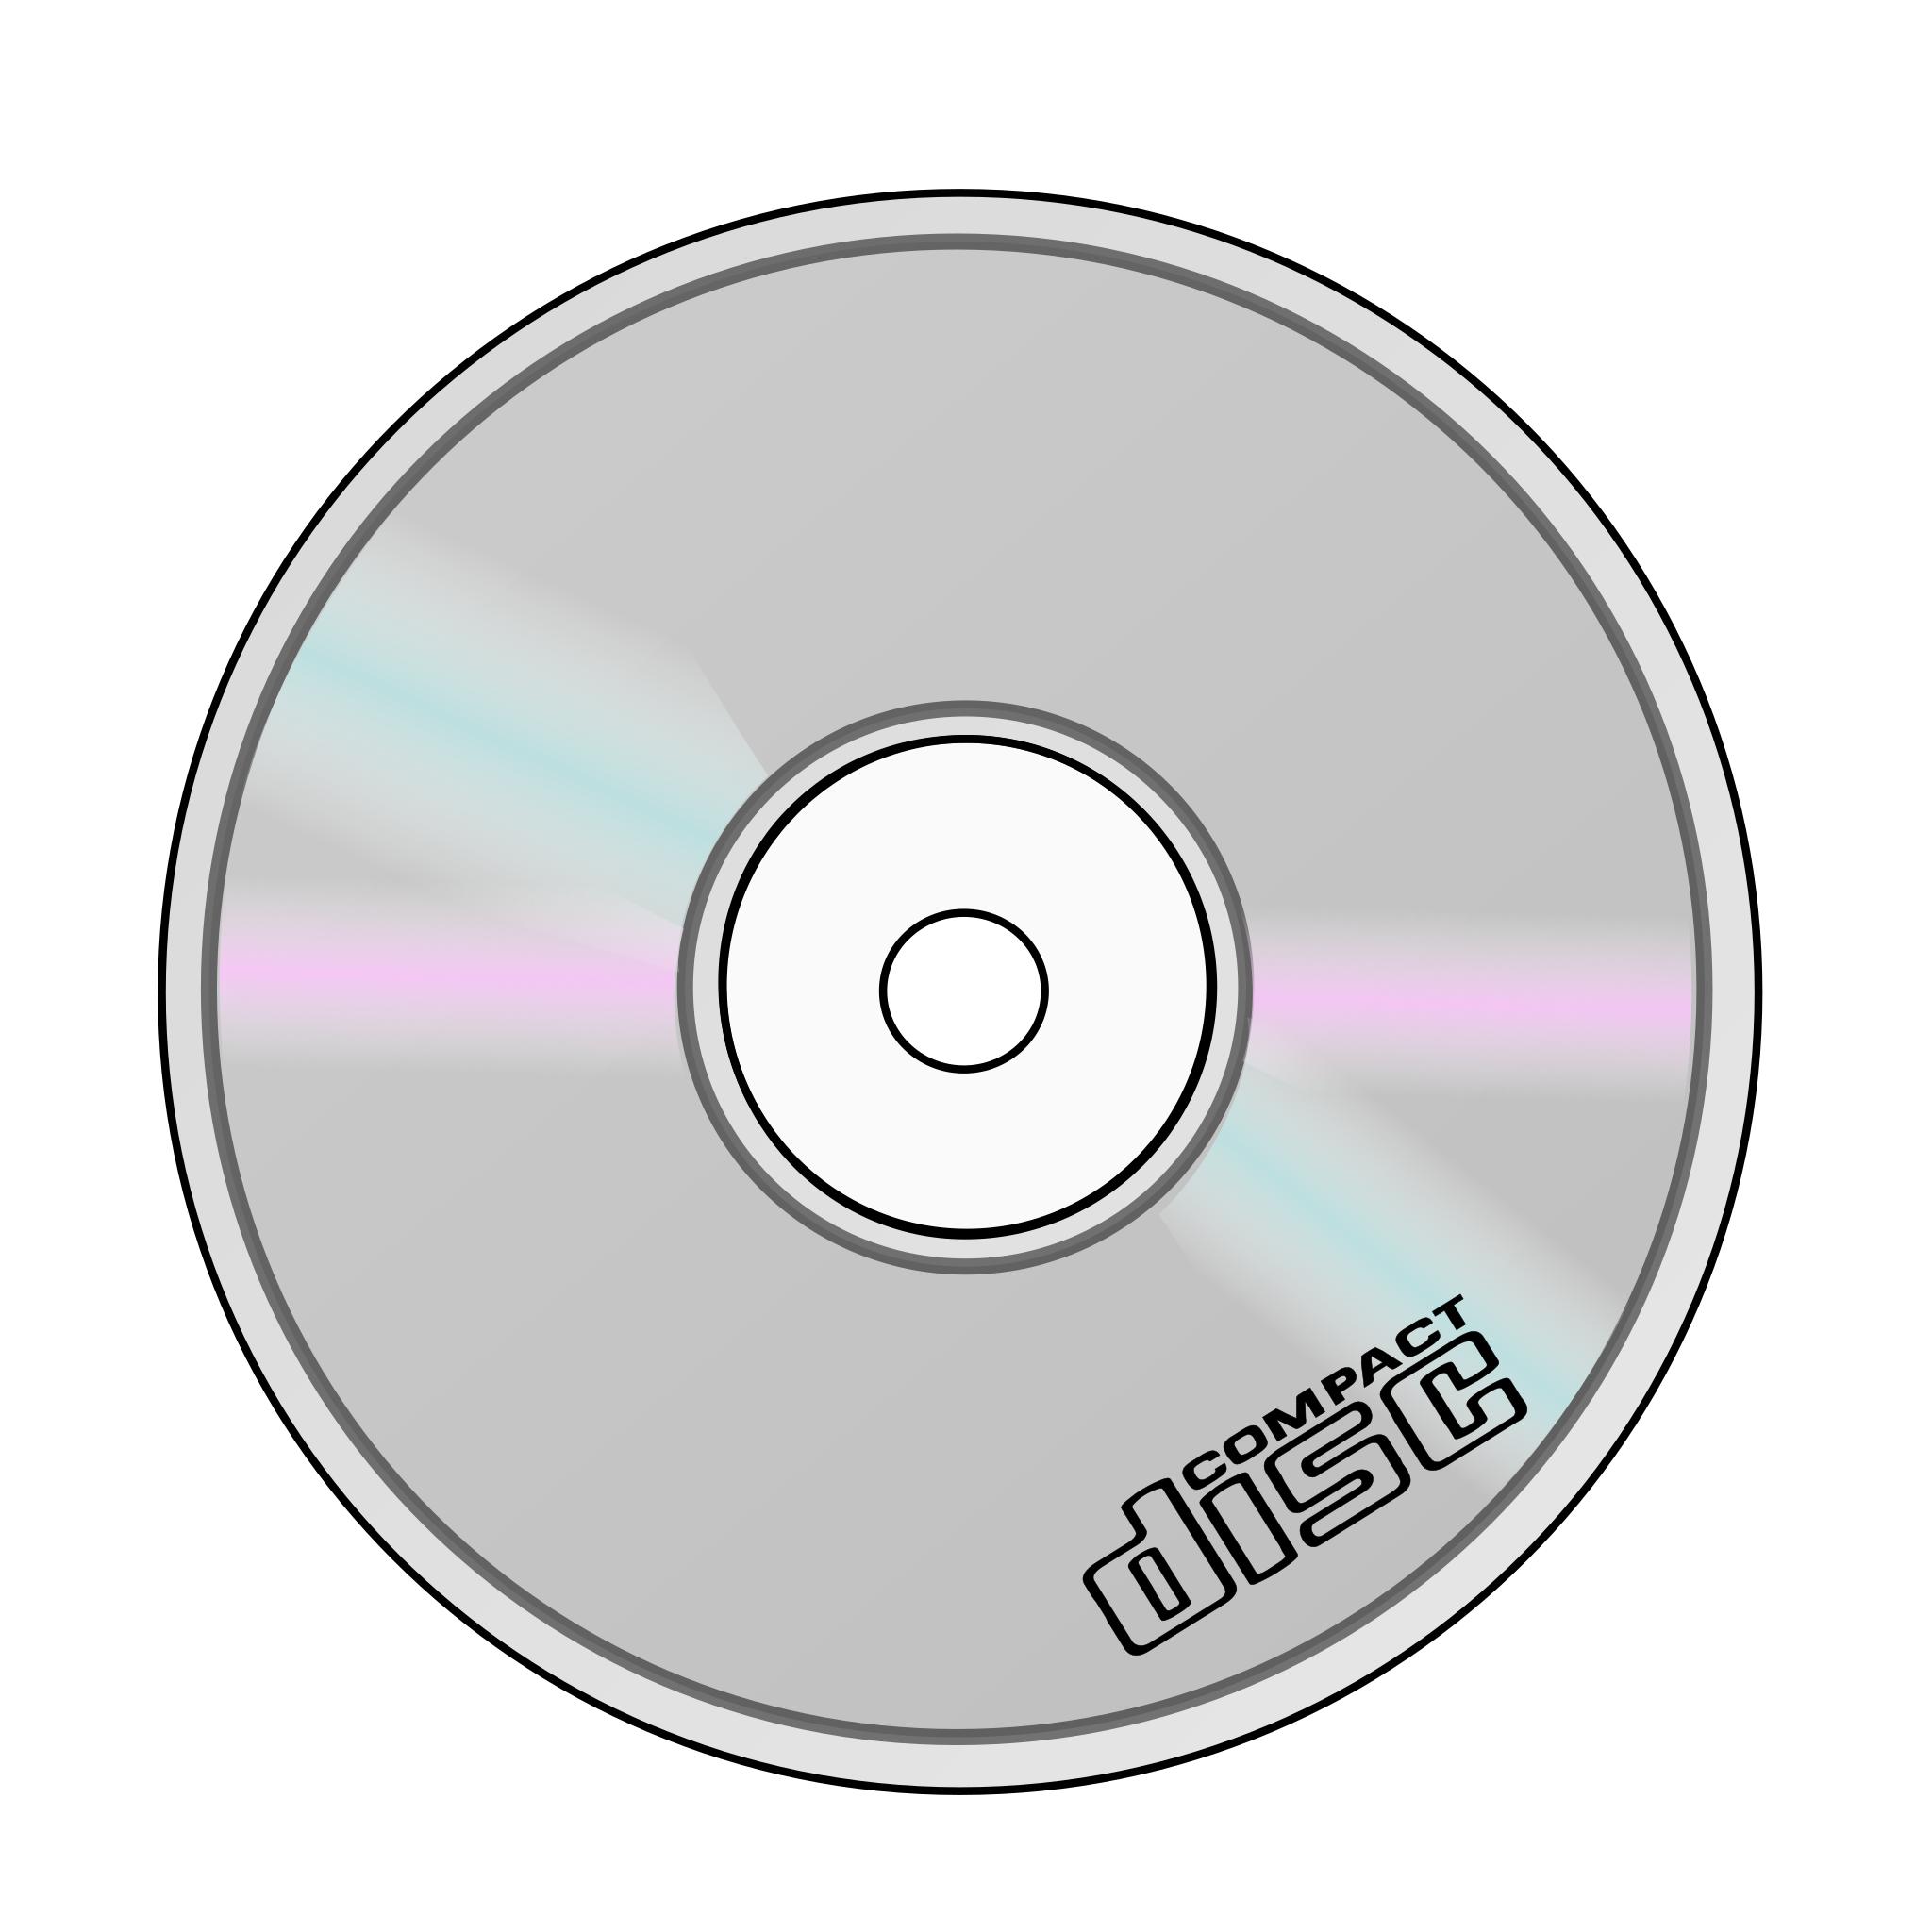 First cd. CD (Compact Disk ROM) DVD (Digital versatile Disc). Compact Disc (CD). Диски CD DVD Blu ray. Первый компакт диск.